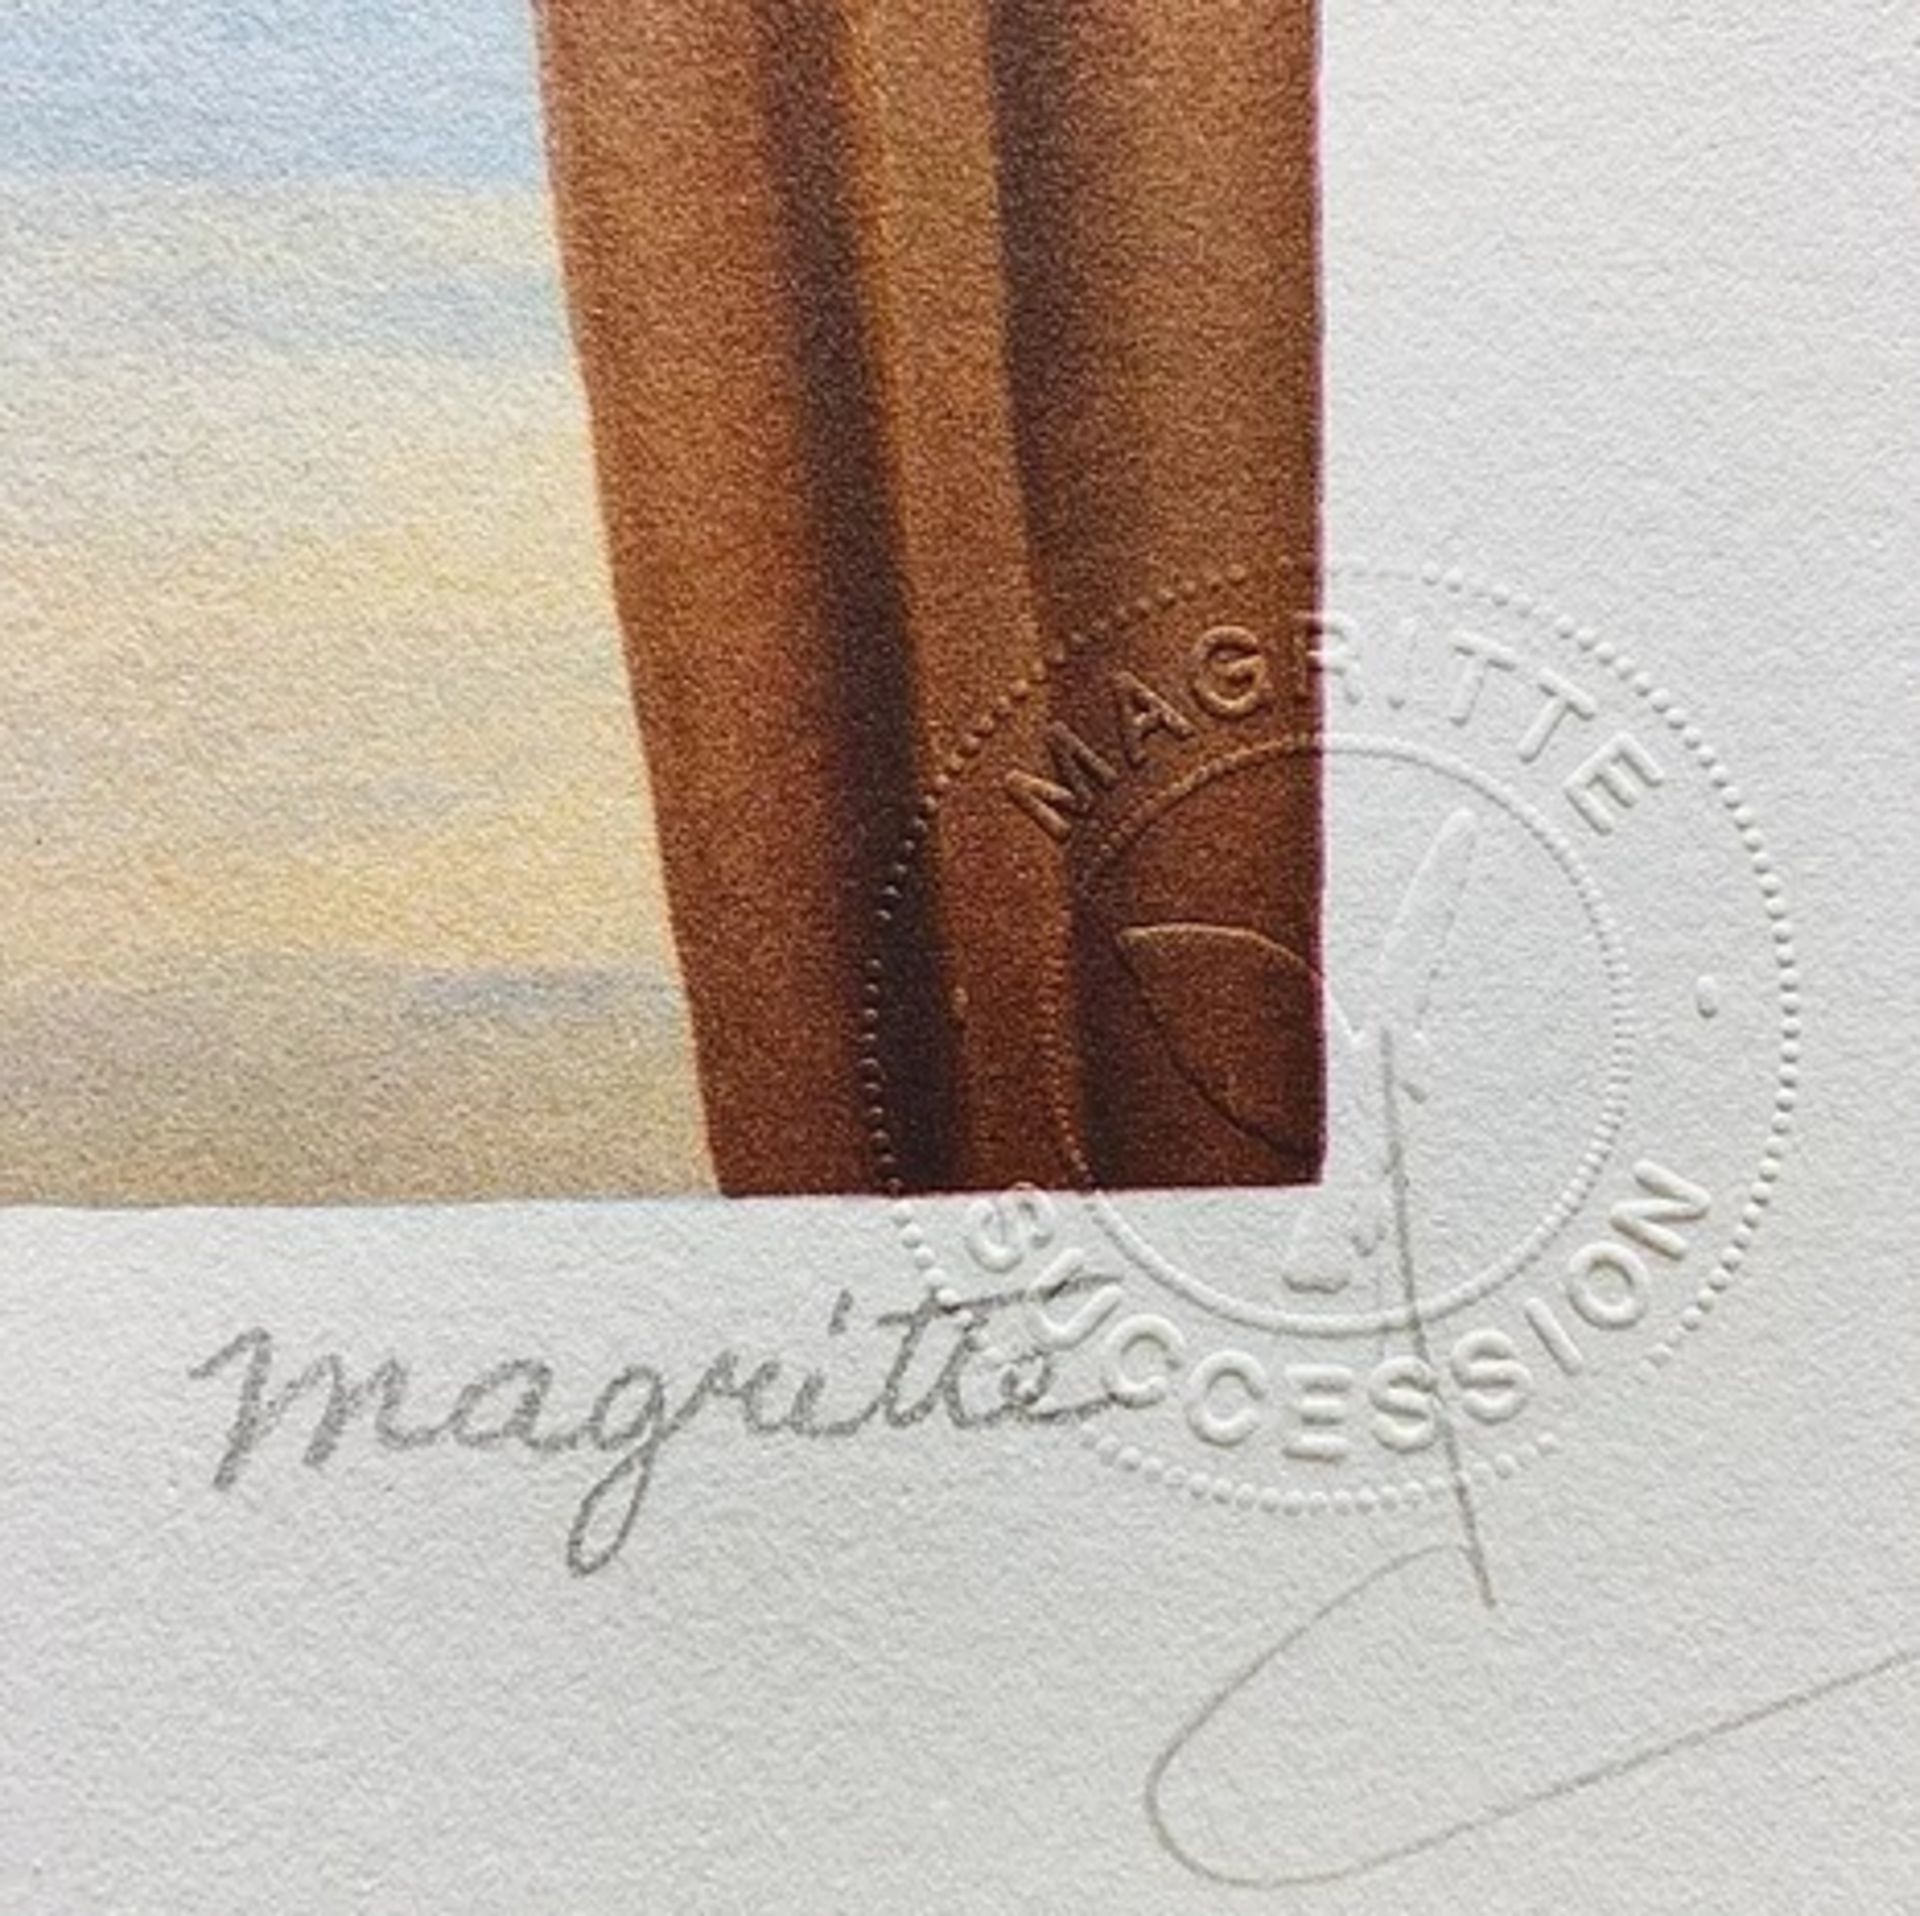 René Magritte - Décalcomanie MM (Decalcomania) - Bild 2 aus 2